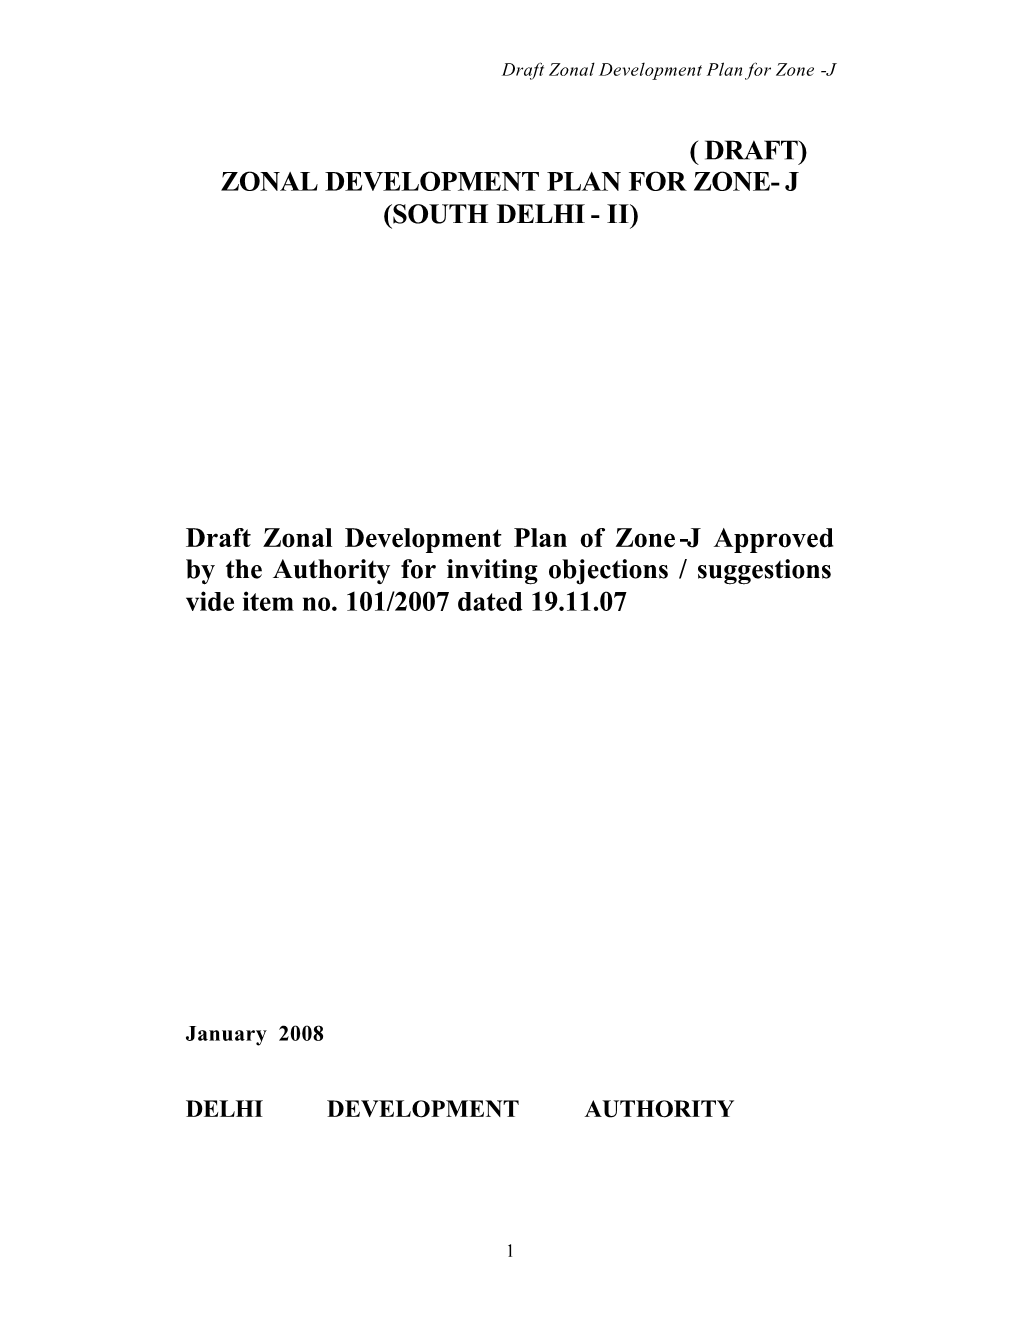 Zonal Development Plan for Zone- J (South Delhi - Ii)